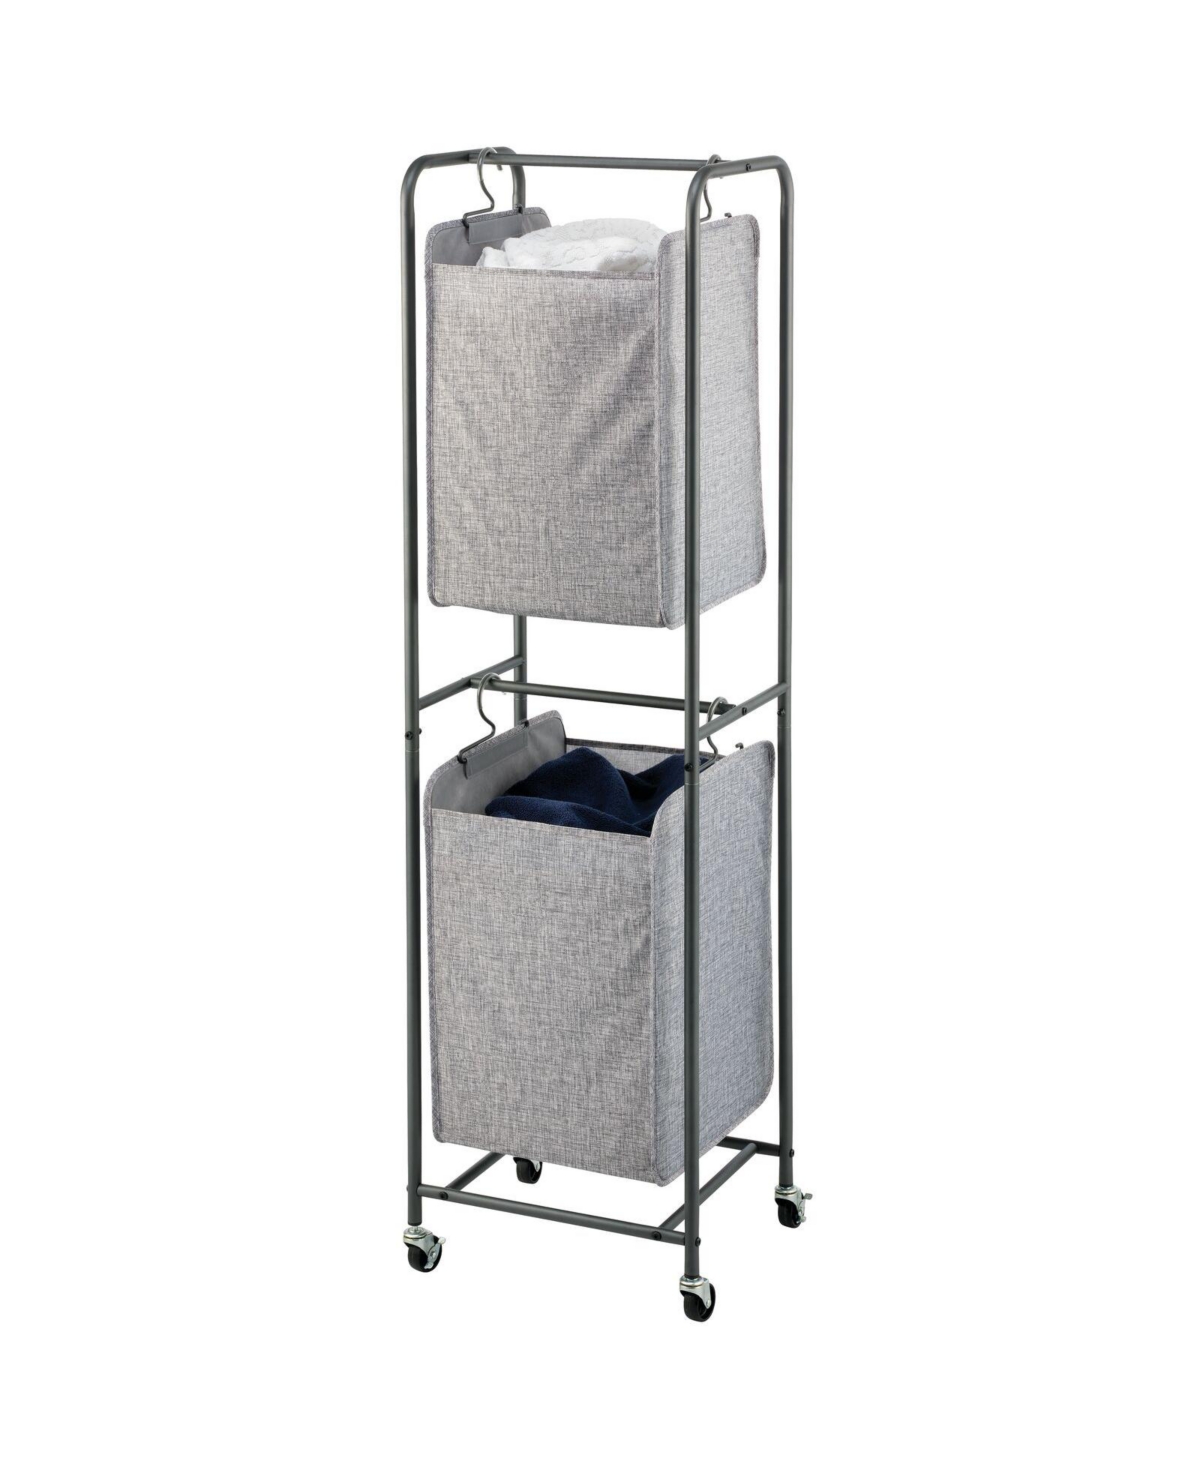 Vertical Portable Laundry Hamper Basket - Metal Frame - Graphite gray/gray